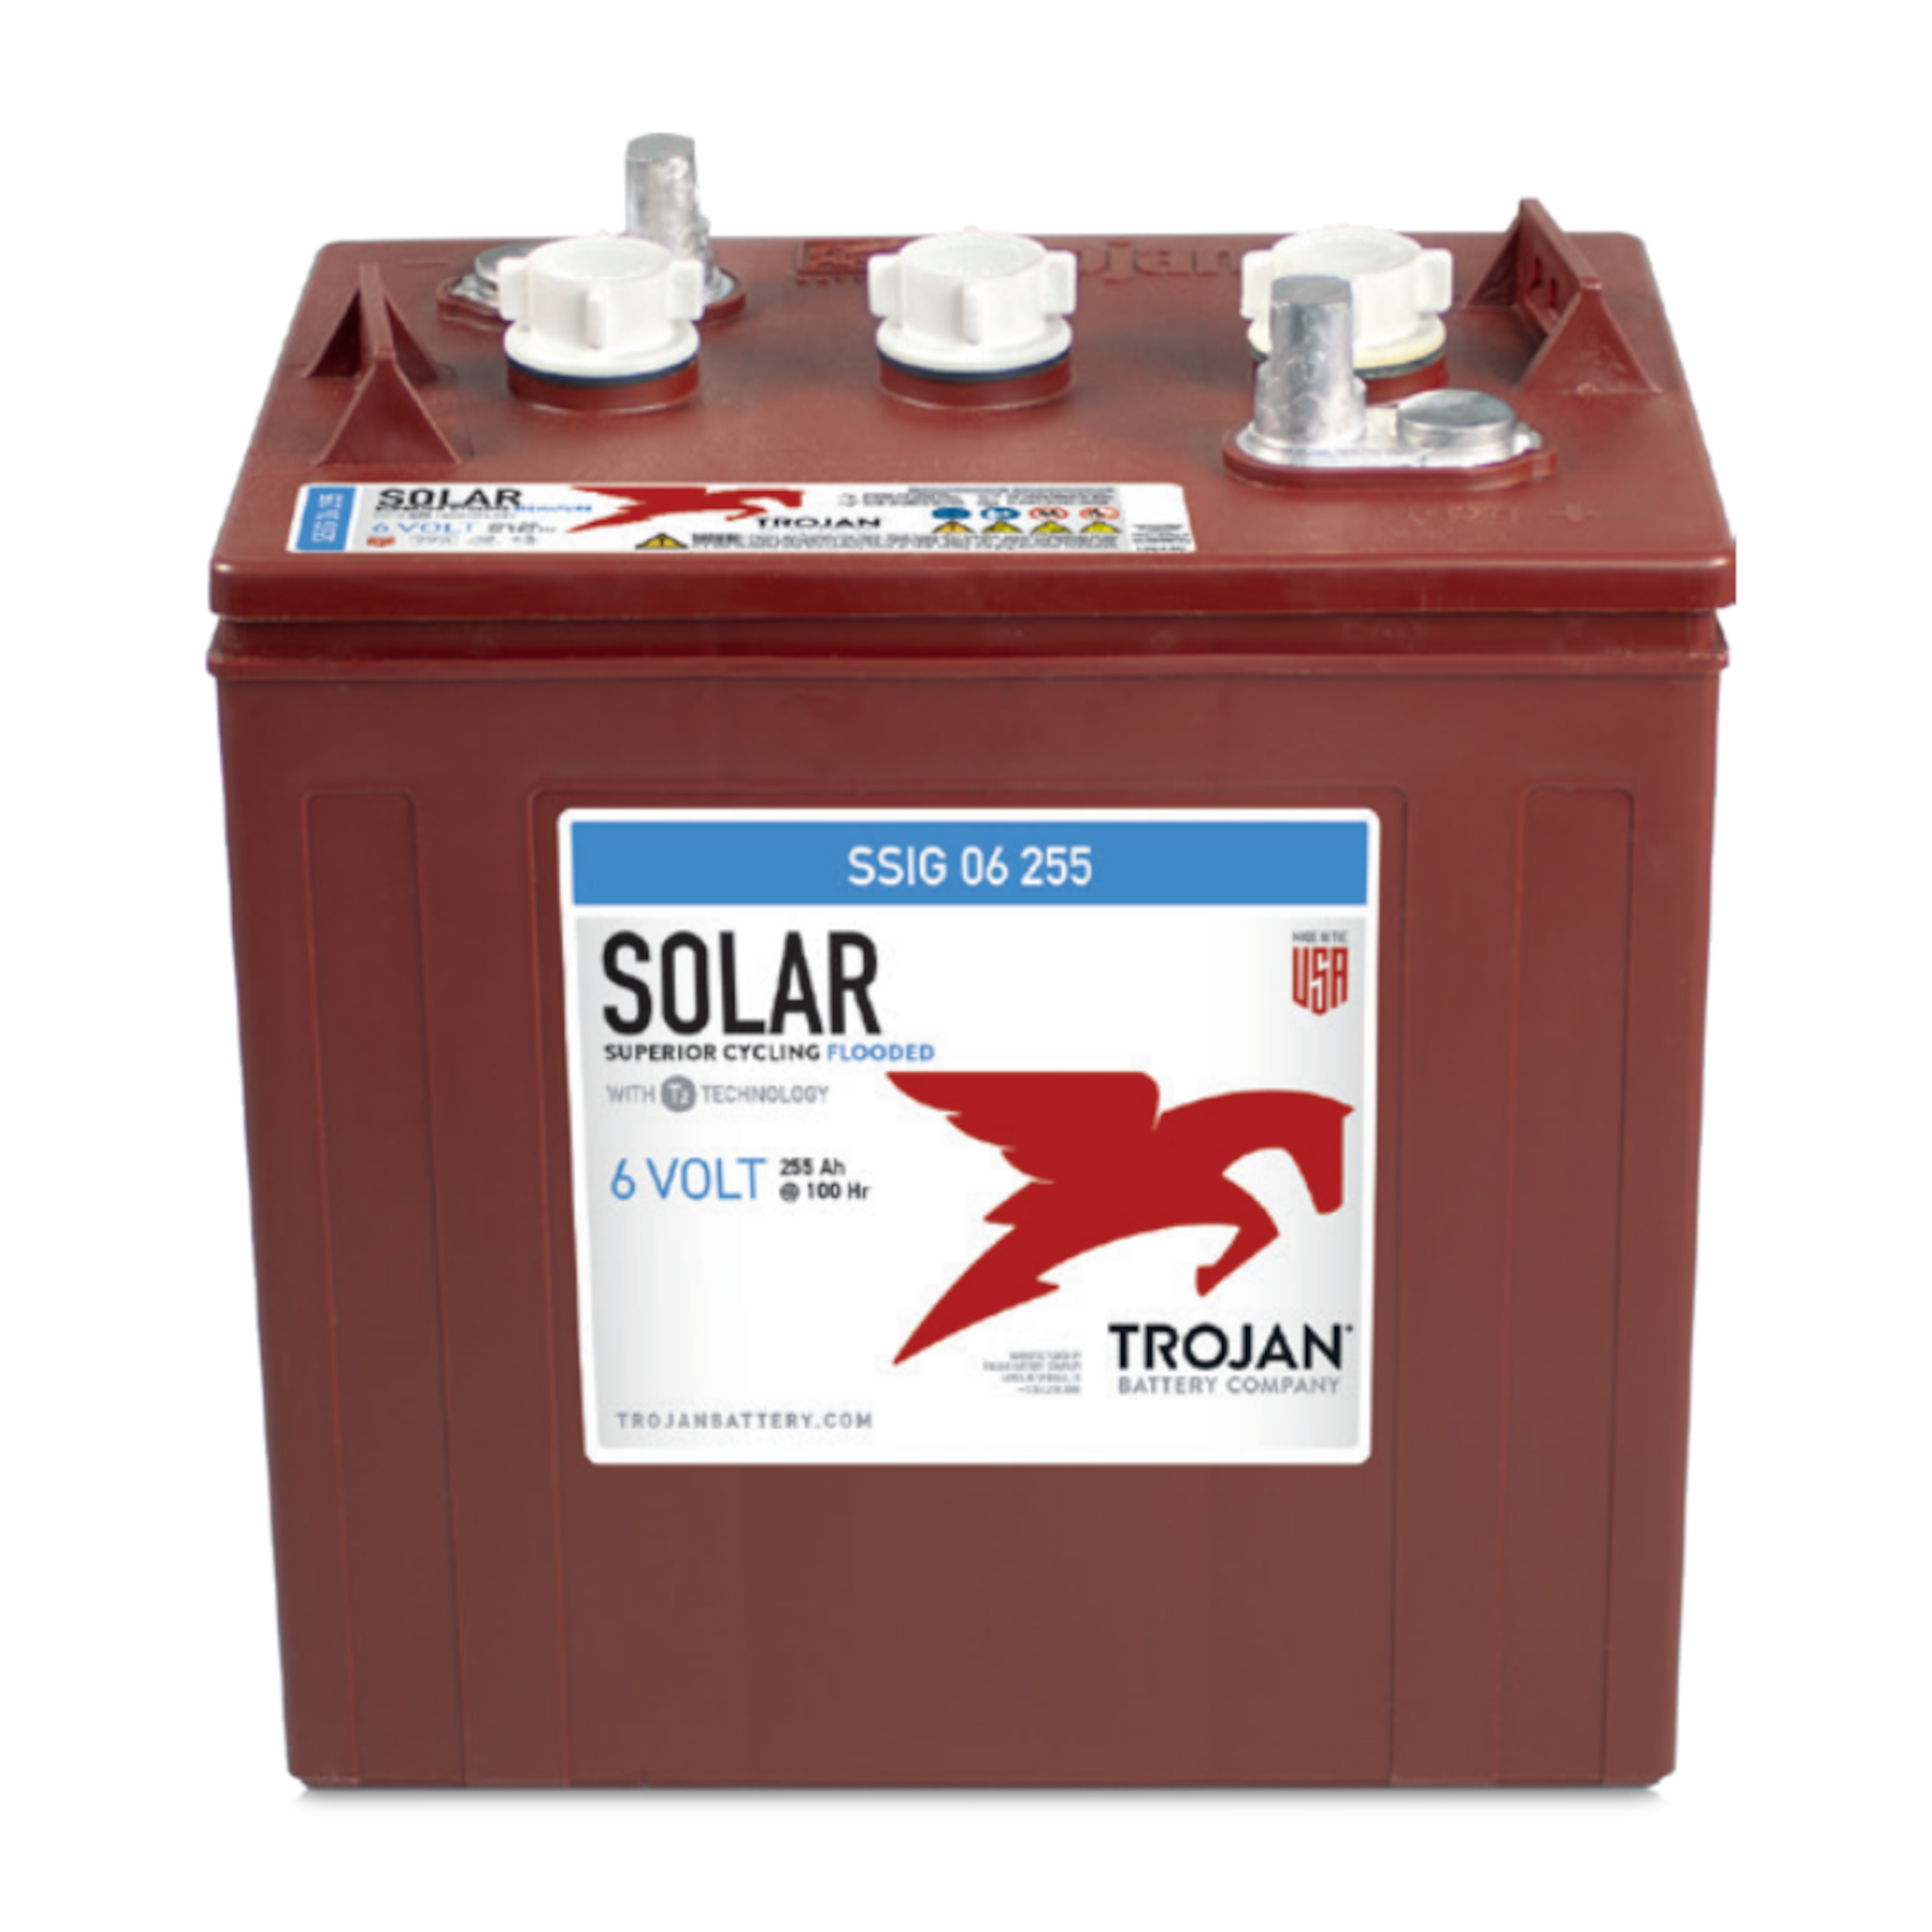 Trojan SSIG 06 255 6V Flooded Solar Battery